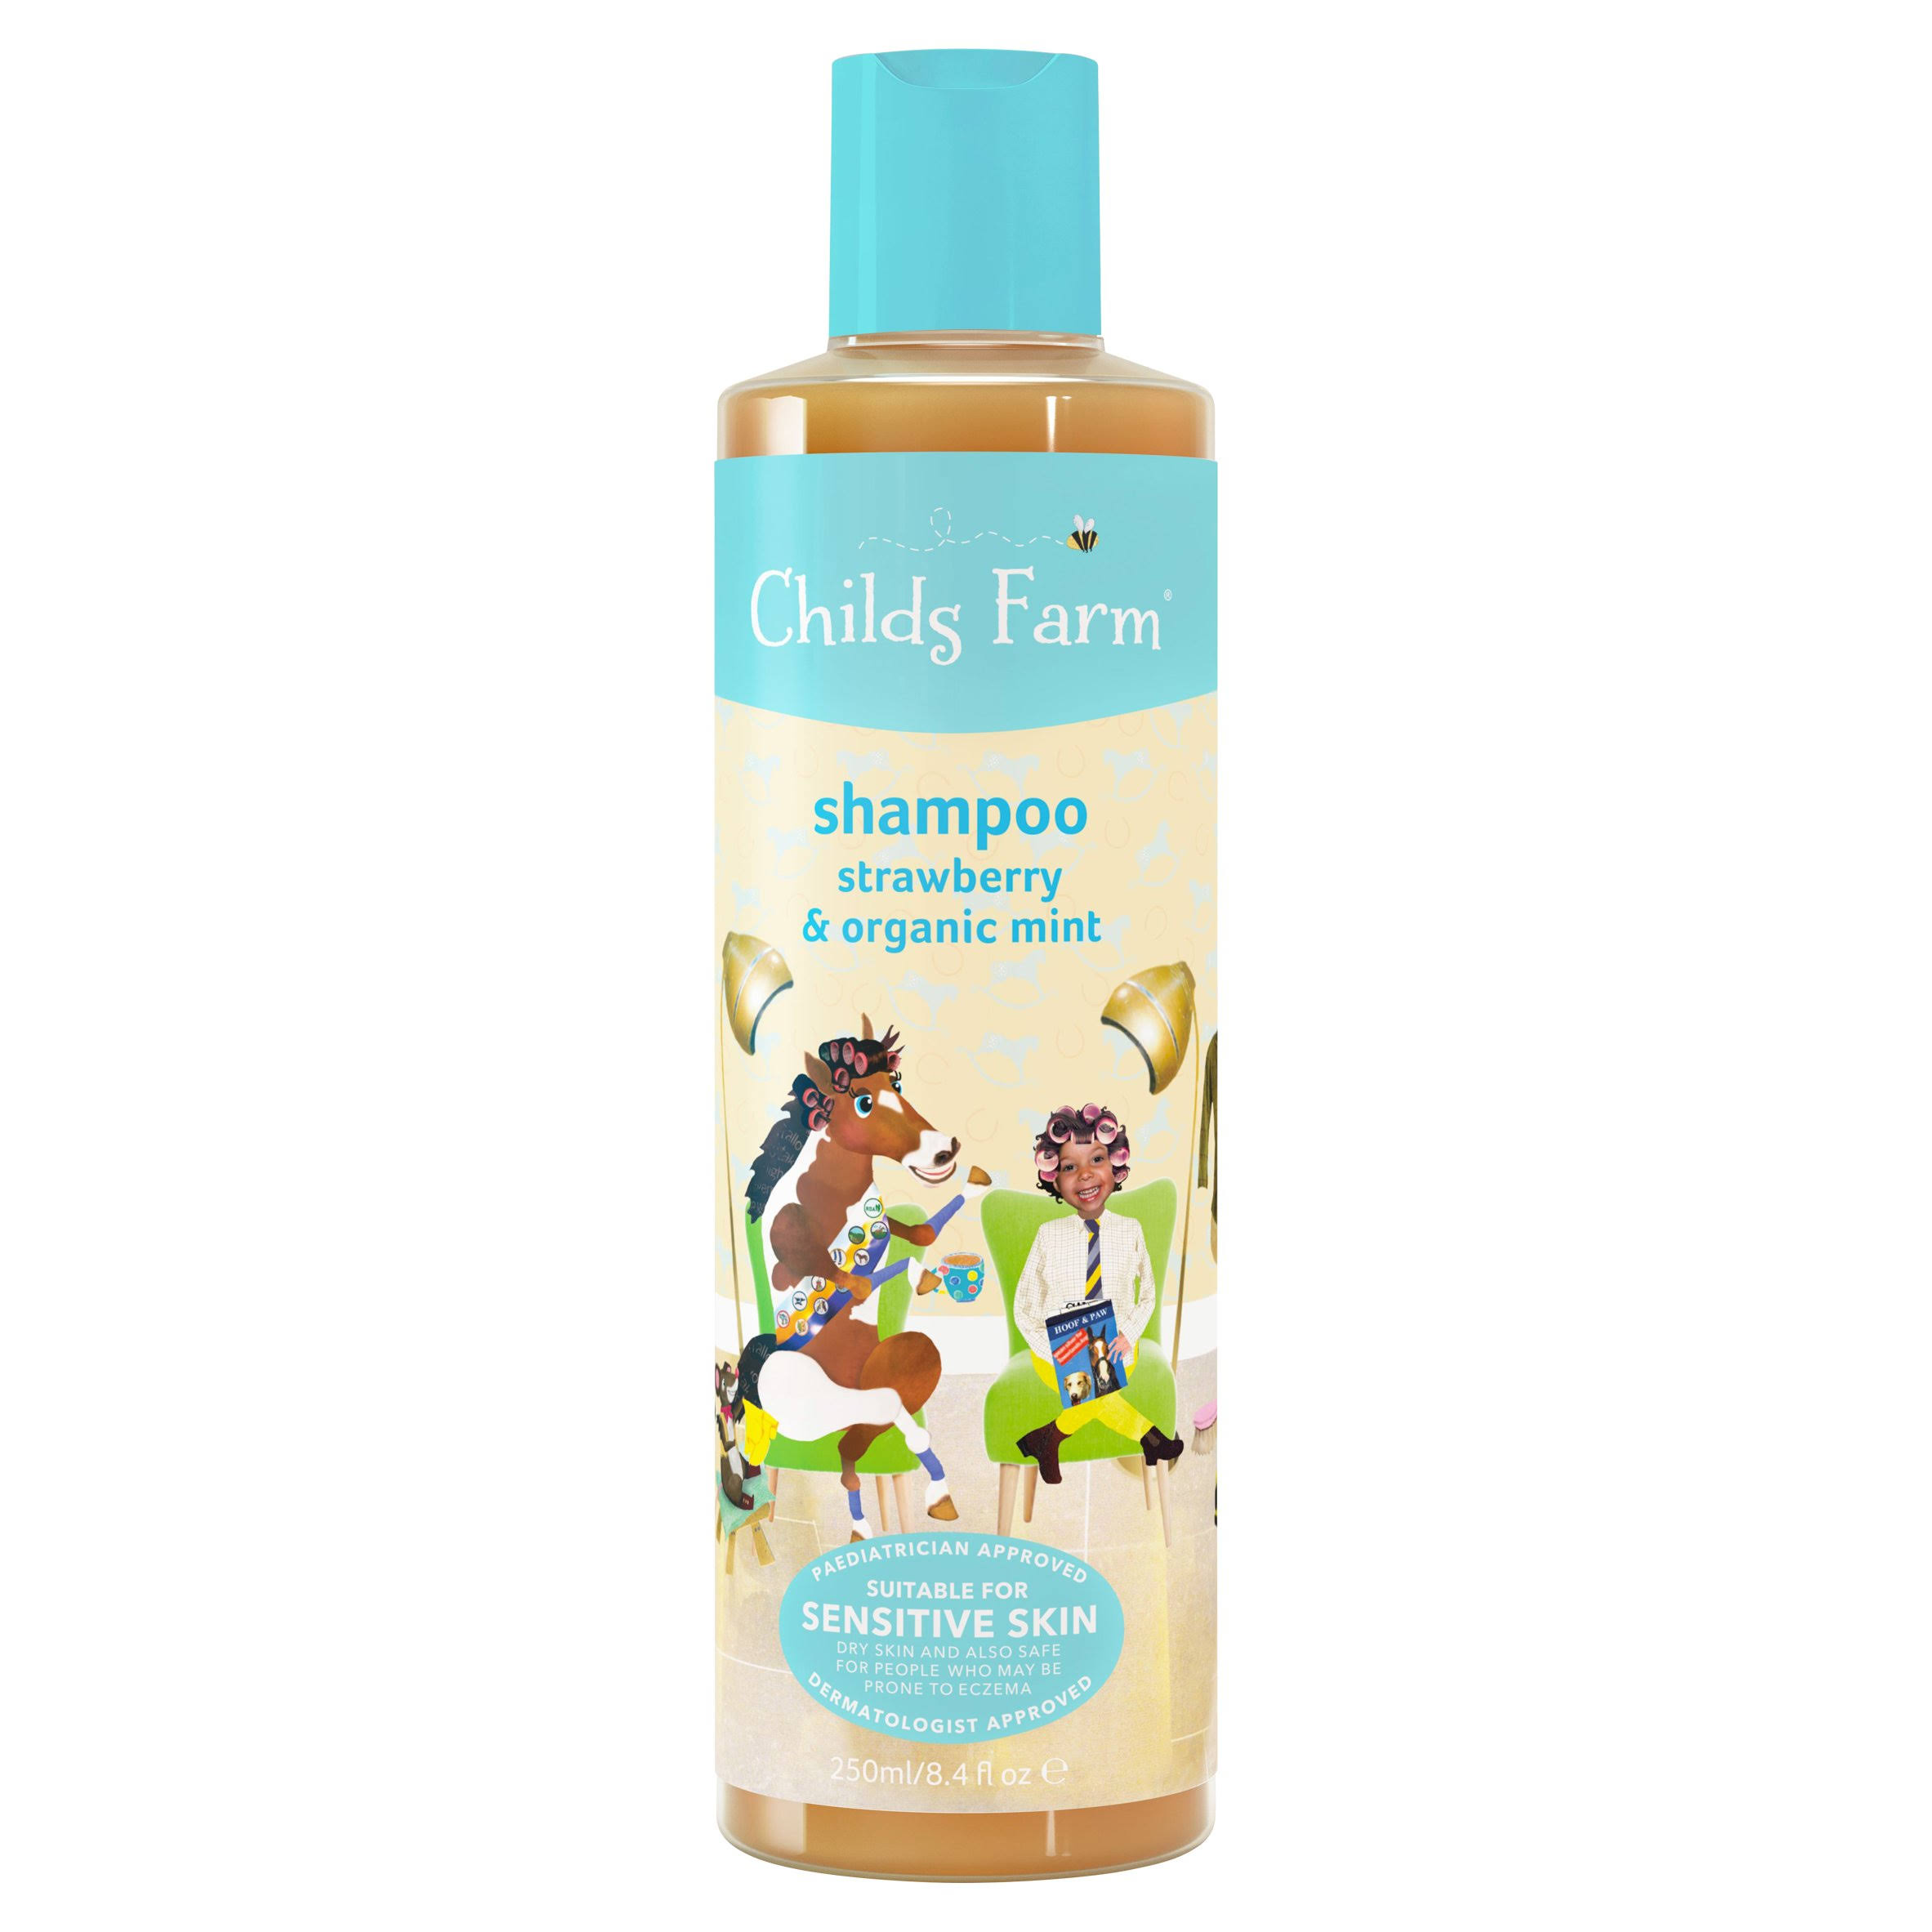 Childs Farm Shampoo - Strawberry & Organic Mint, 250ml